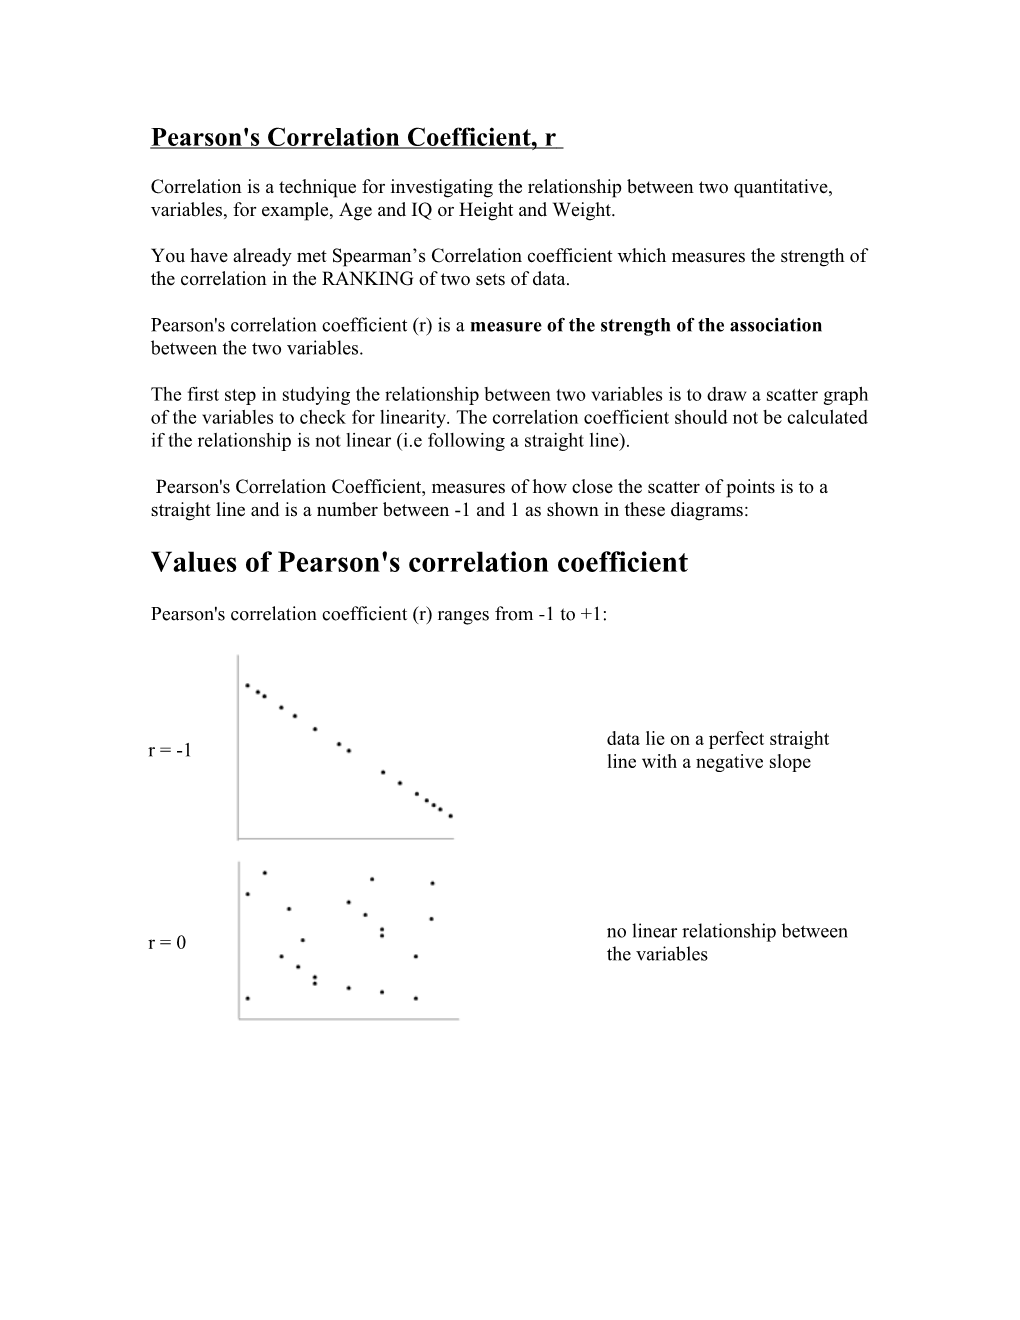 Pearson's Correlation Coefficient, R